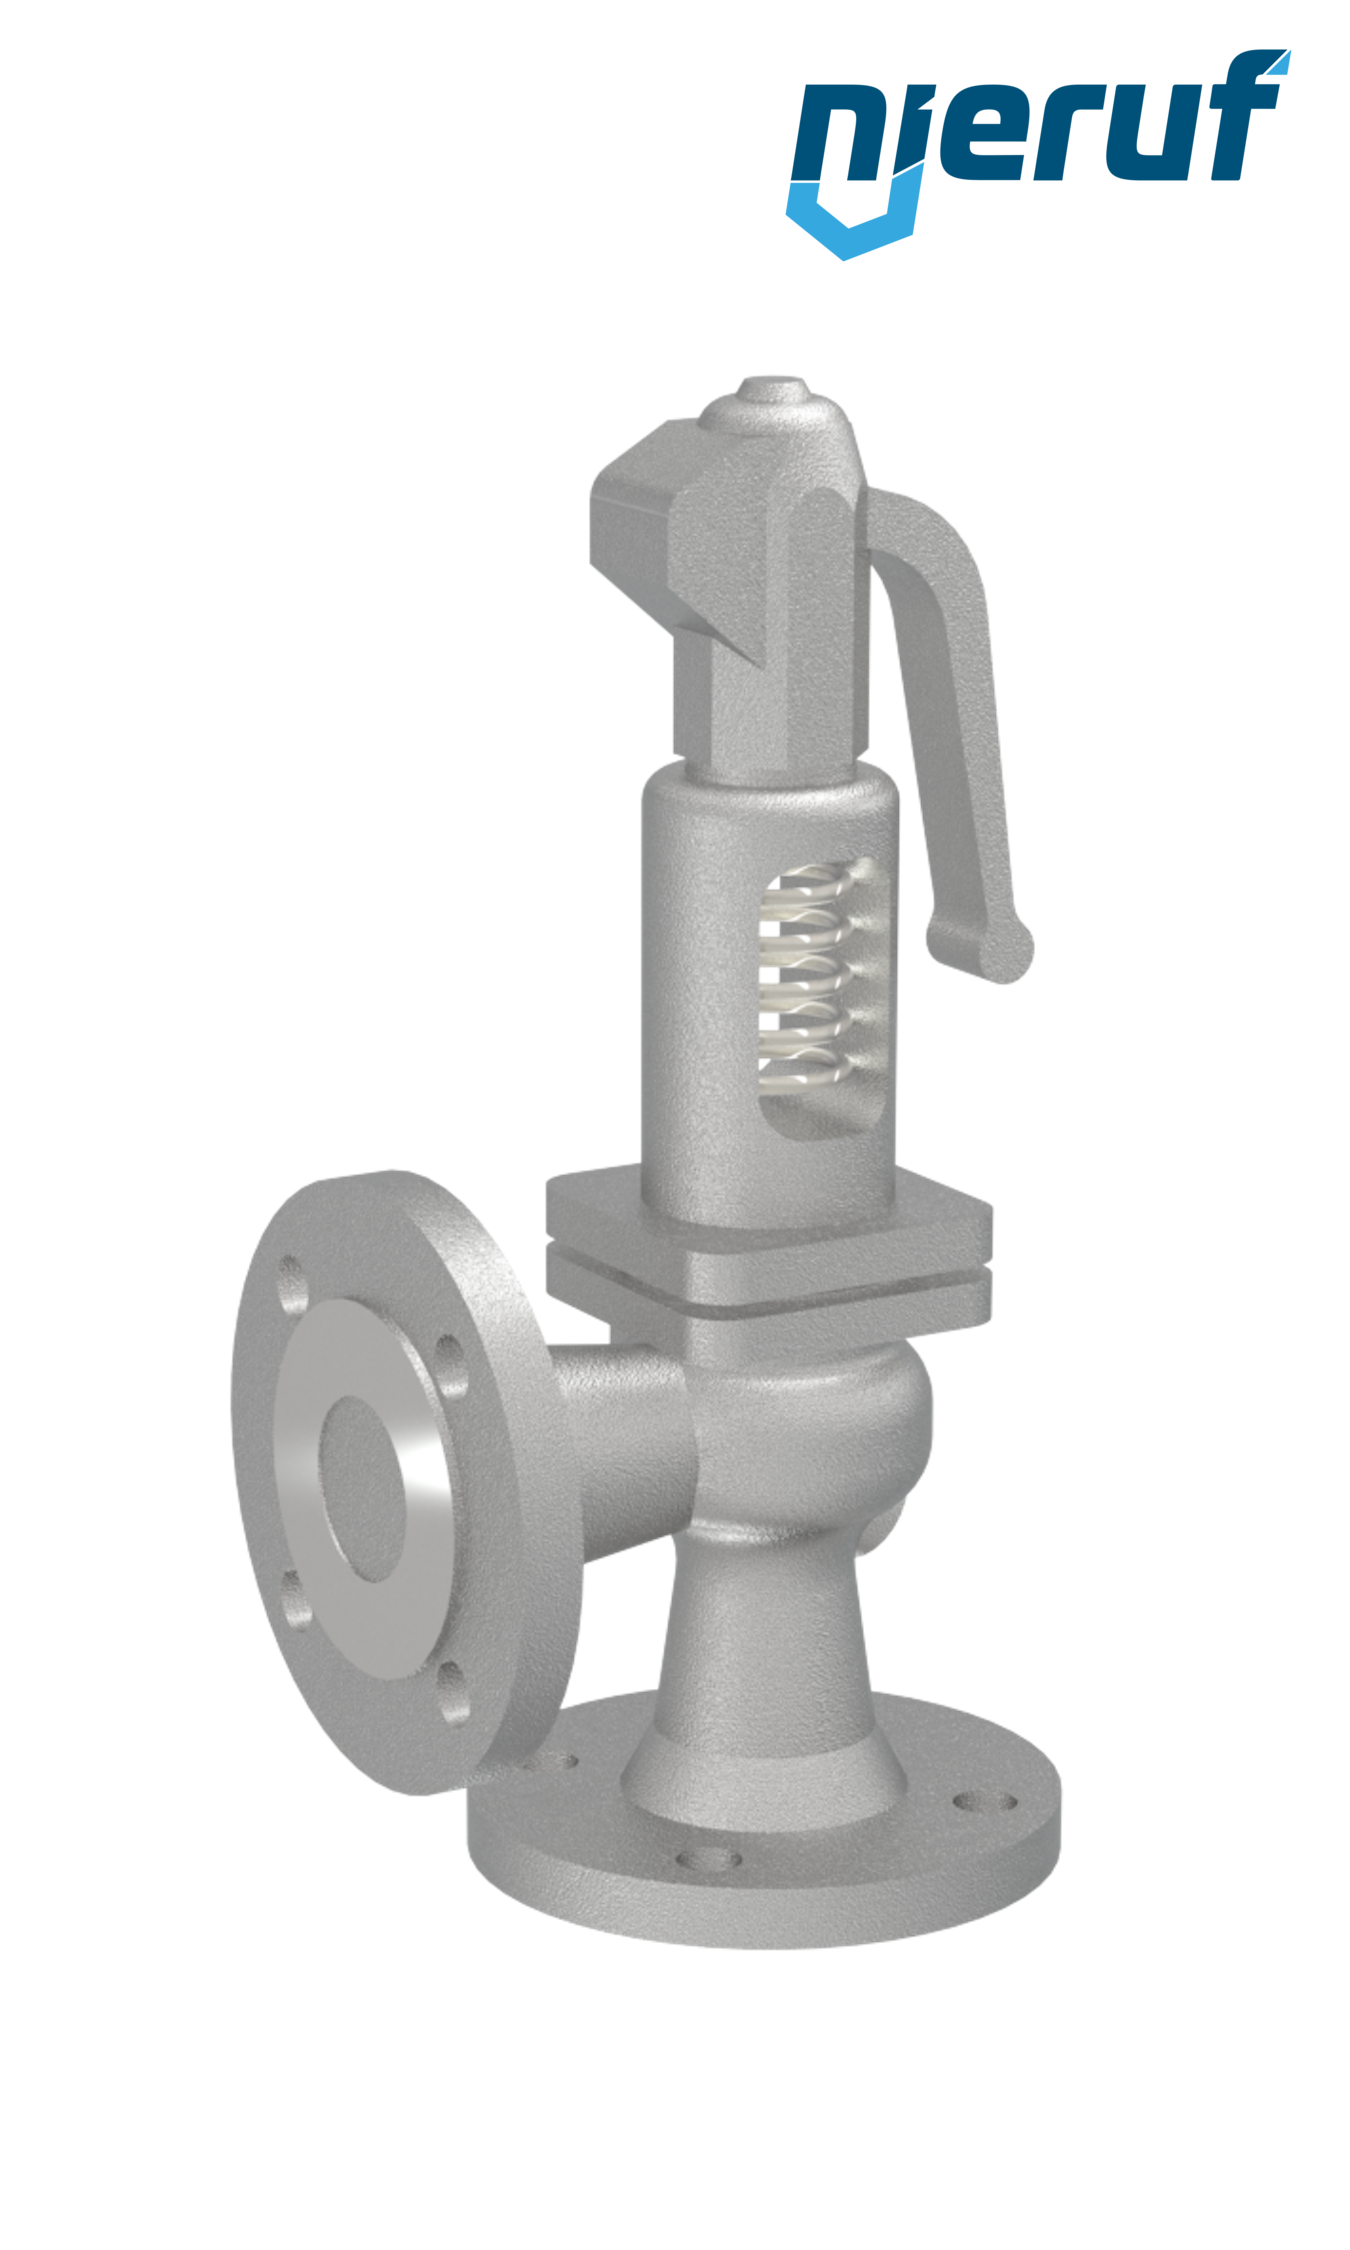 flange-safety valve DN80/DN80 SF0102, cast iron EN-JL1040 FPM, with lever